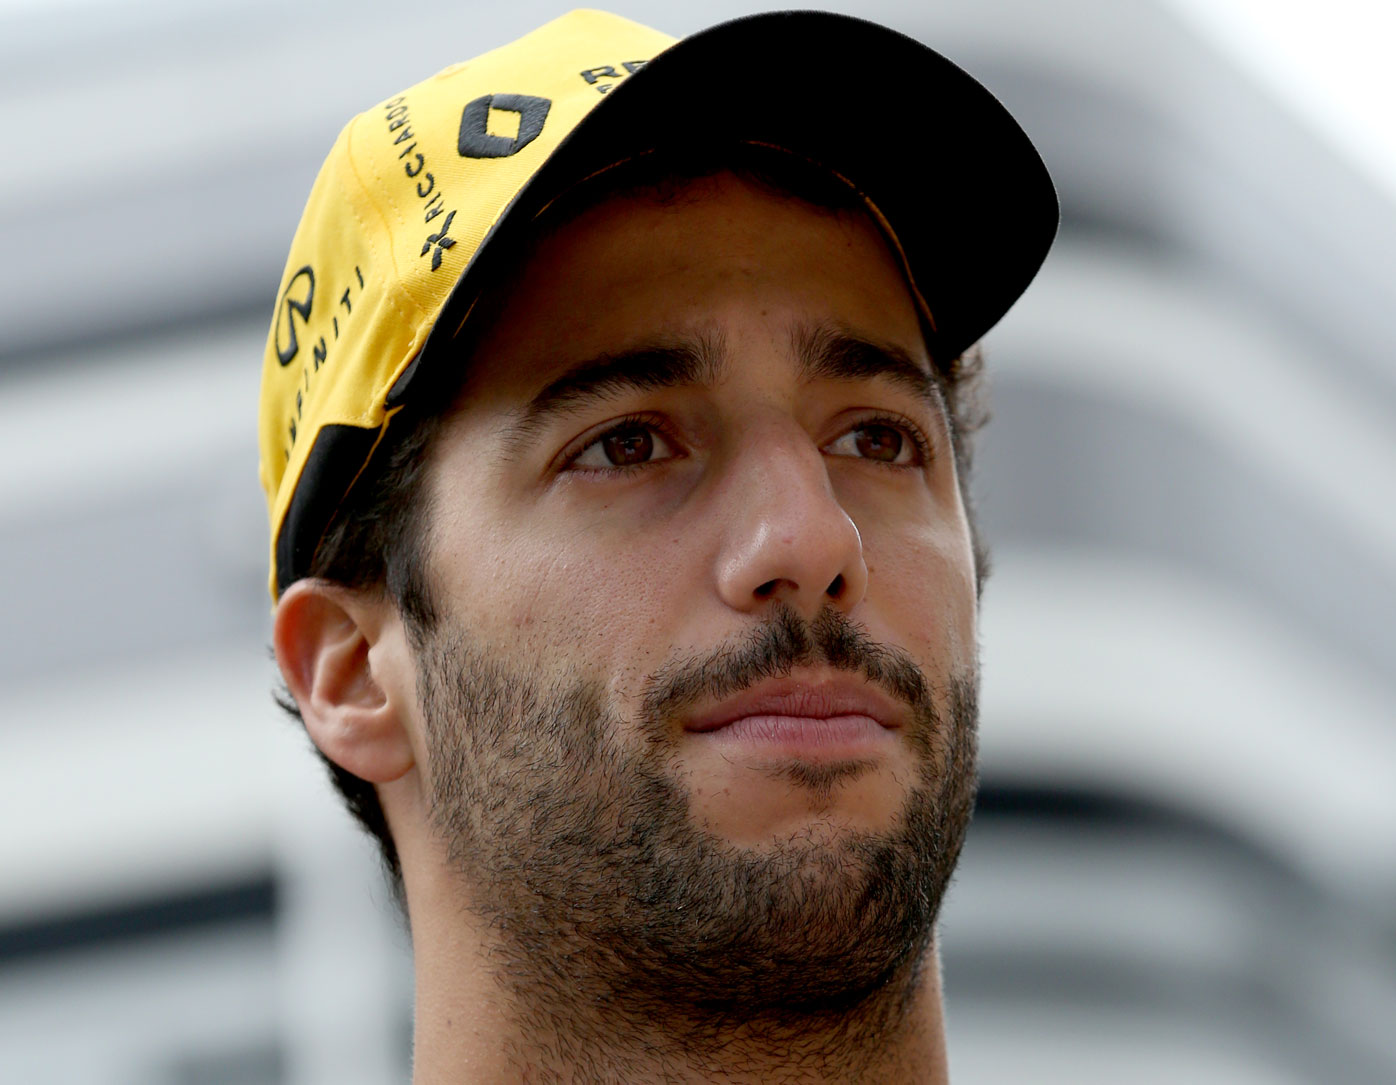 F1 Russian Grand Prix | Daniel Ricciardo first lap incident